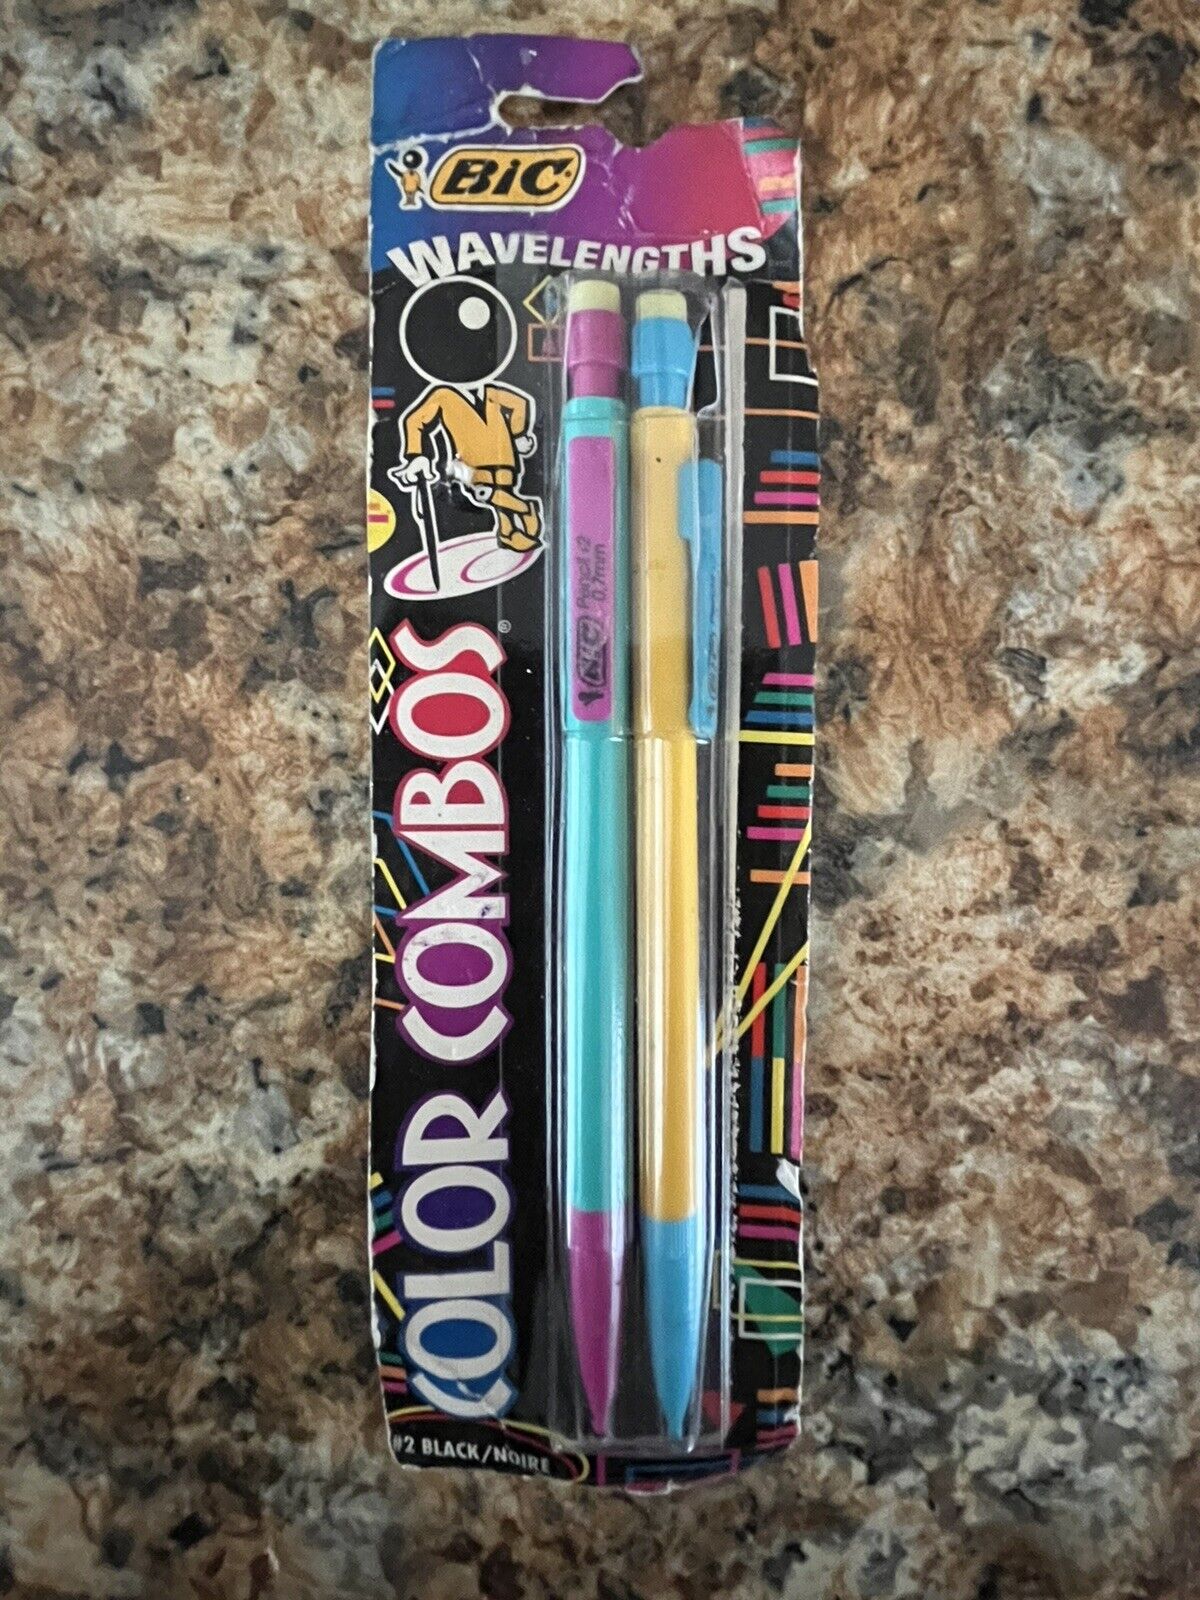 Vintage New 1994 BIC Wavelengths Color Combos 2pk No. 2 Mechanical Pencils NOS